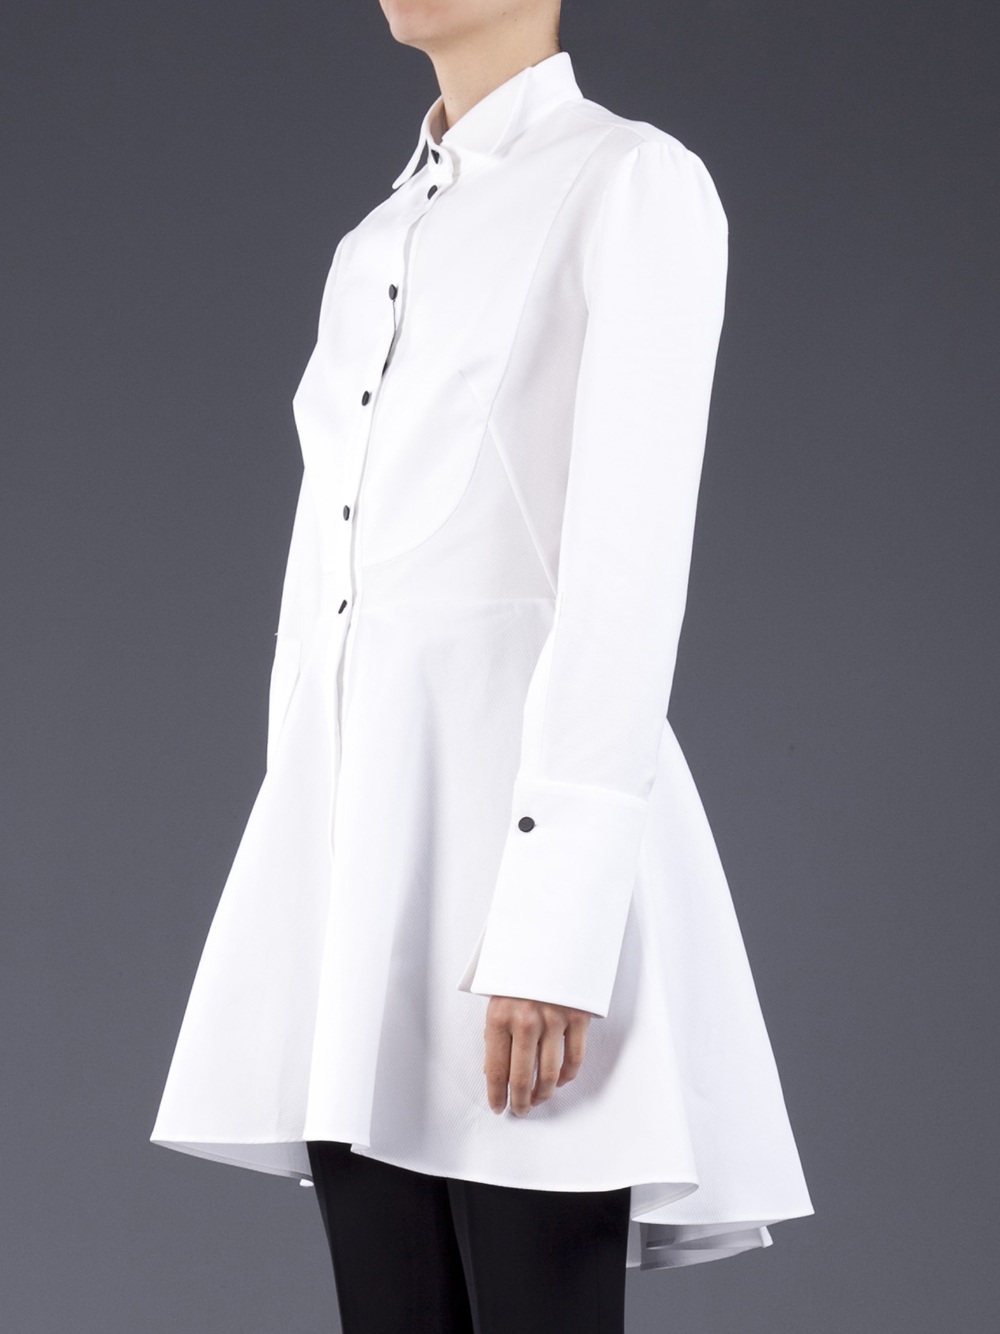 Lyst Alexander Mcqueen Tuxedo Shirt  Dress  in White 